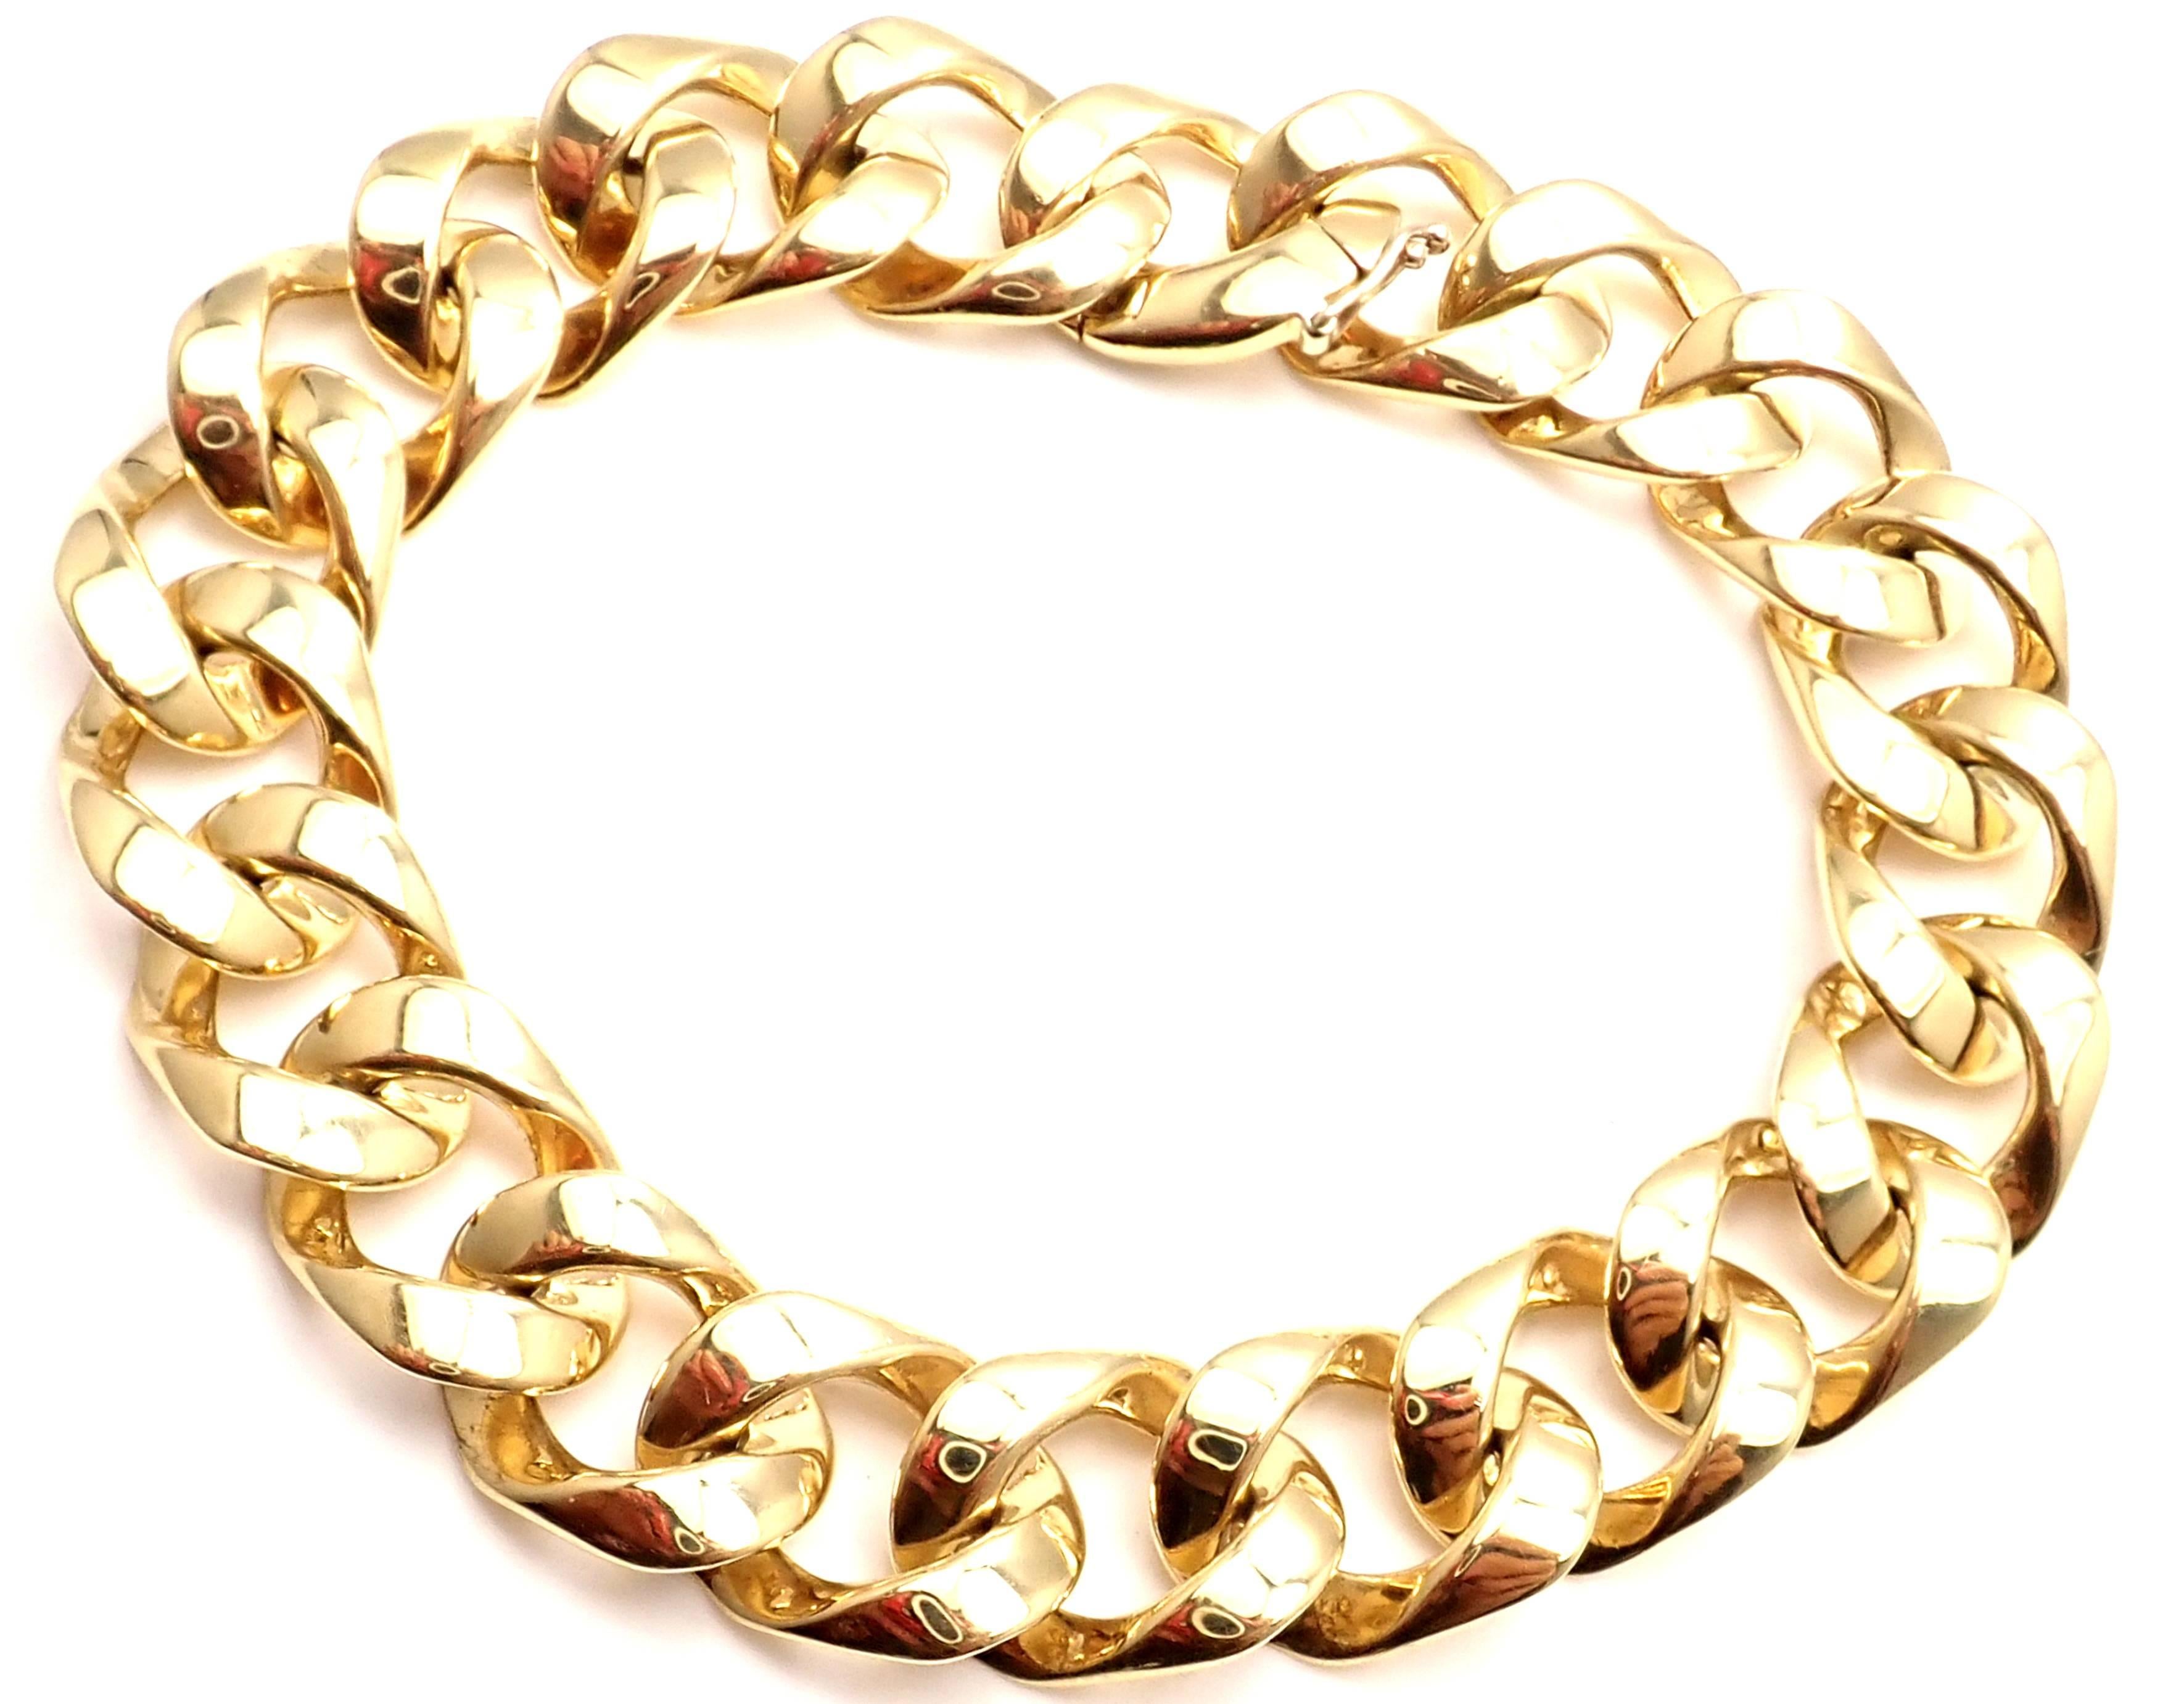 18k Yellow Gold Link Bracelet by Tom Ford. 
Details: 
Length: 7.25